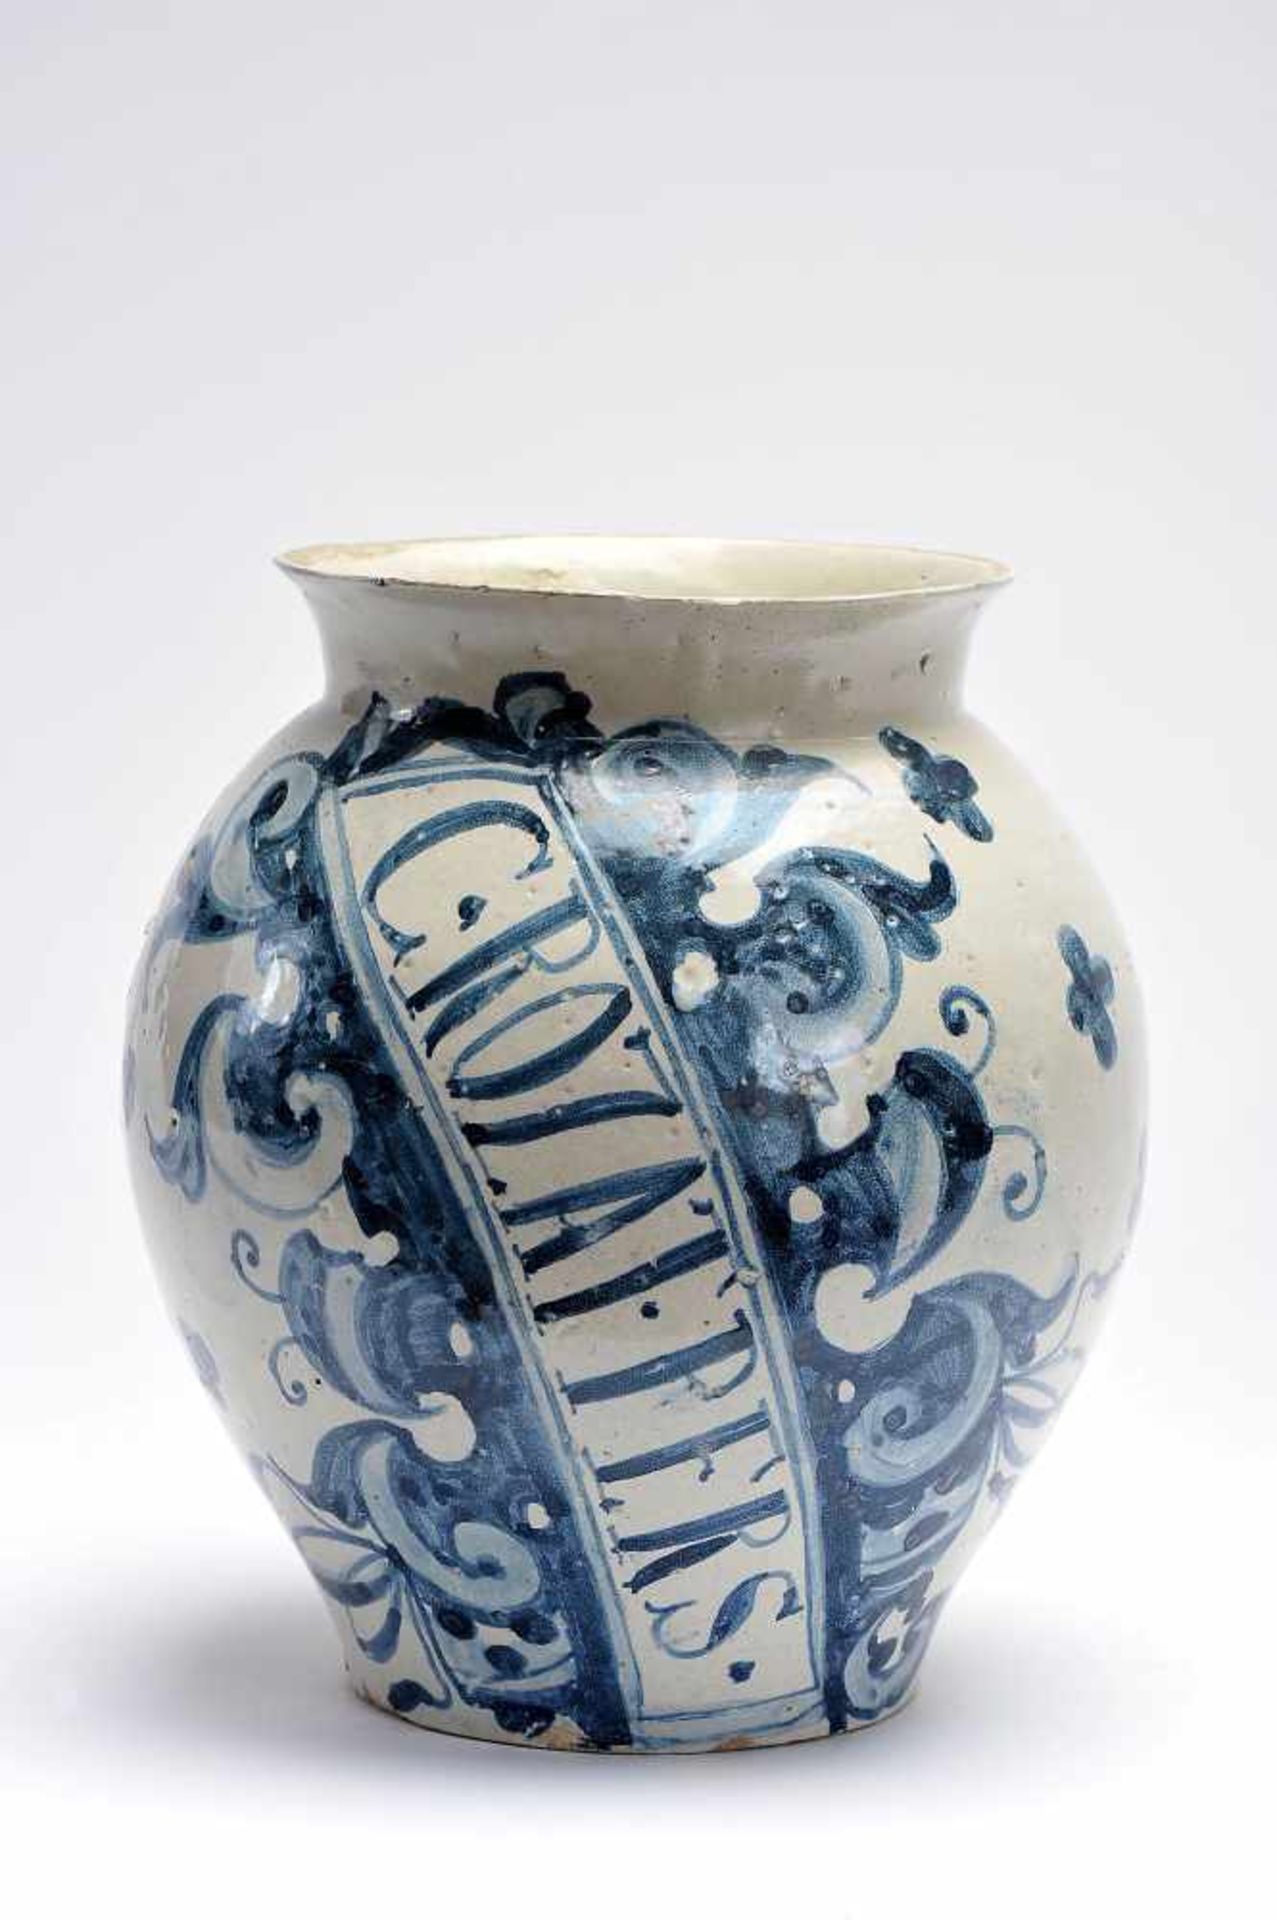 A Pharmacy Pot, faience, blue «Baroque Cartouche» decoration with C.ROZAT.PERS inscription,